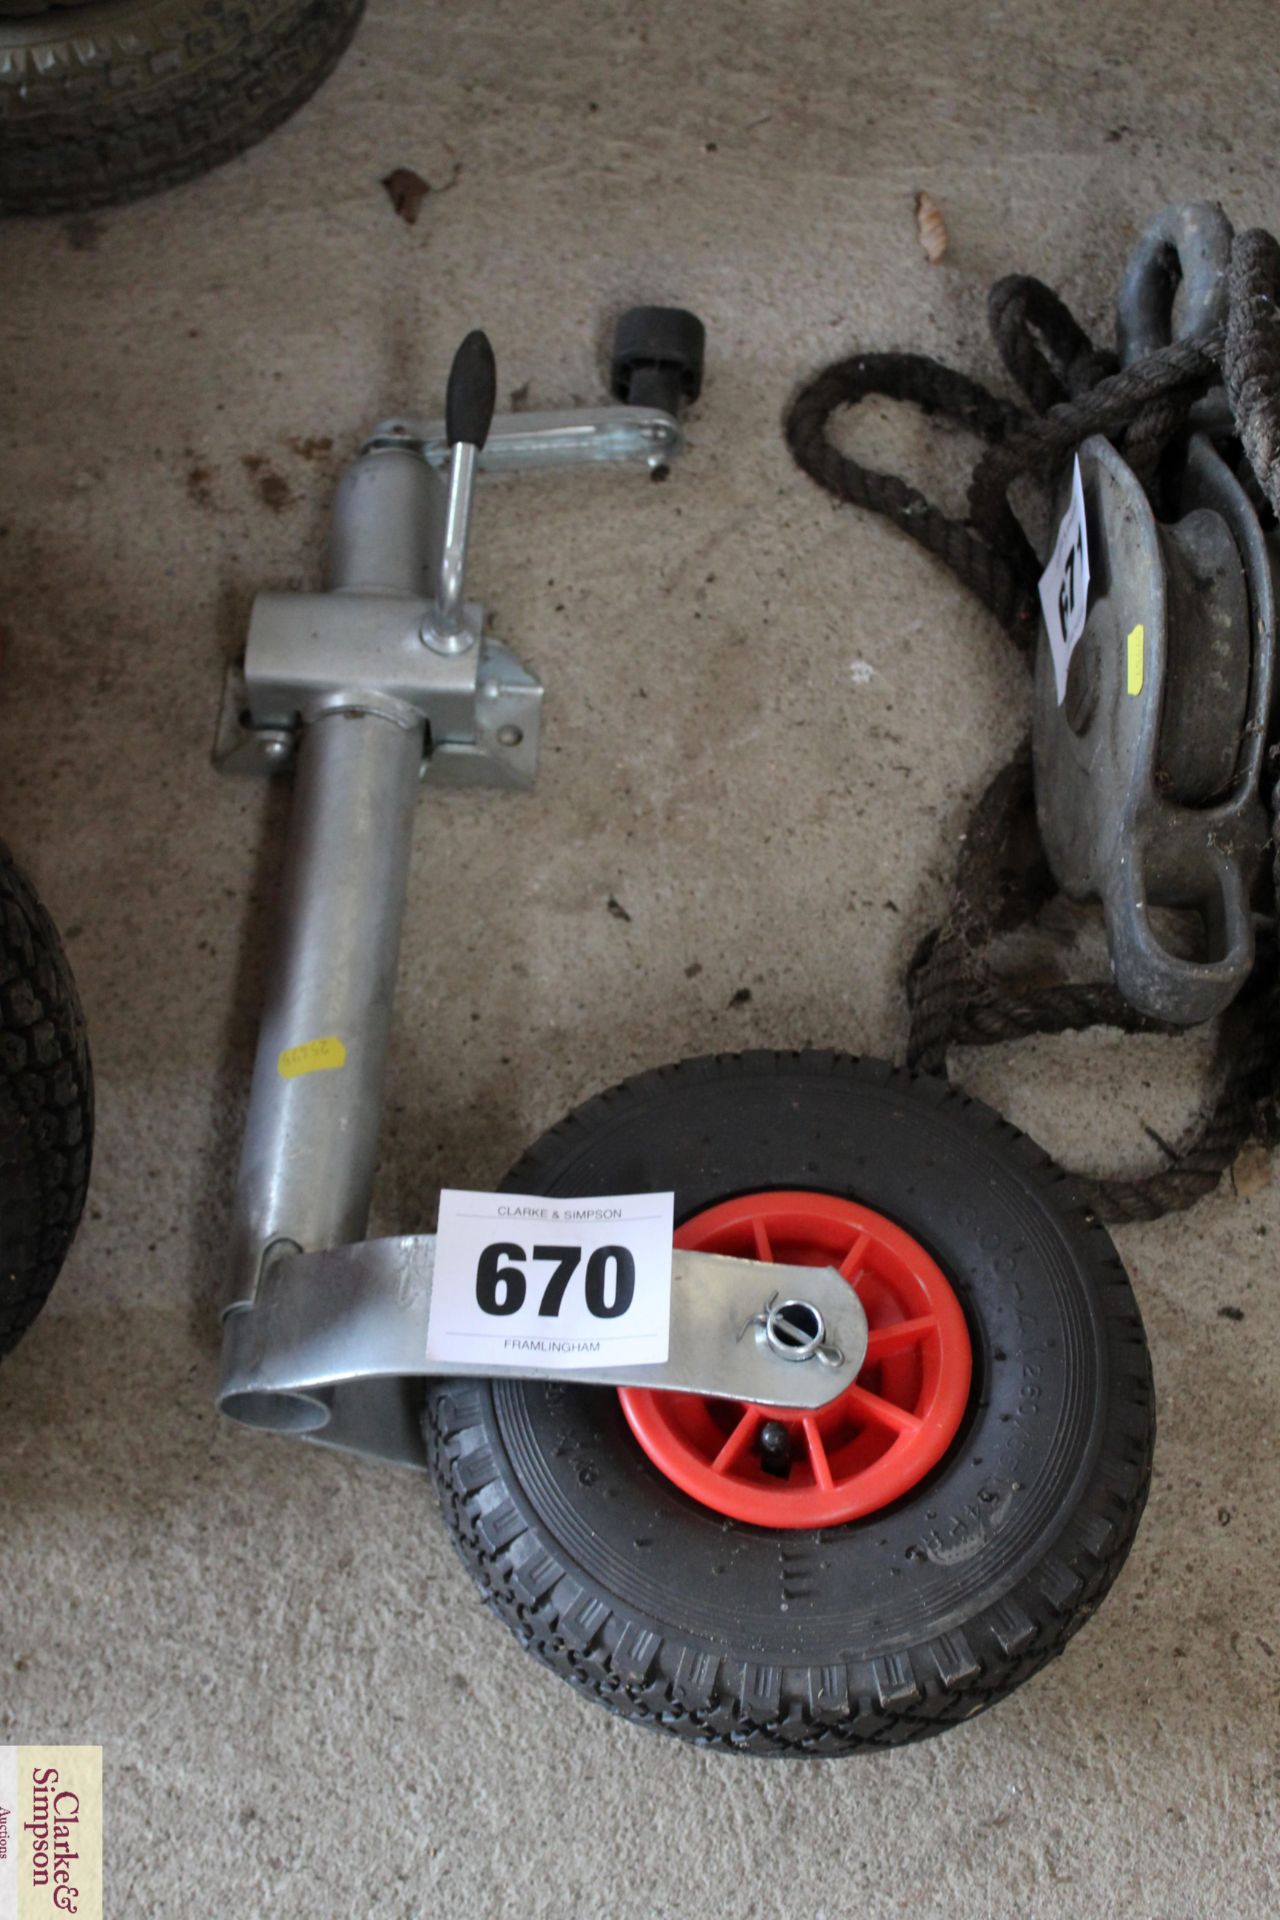 Unused trailer jockey wheel and clamp.